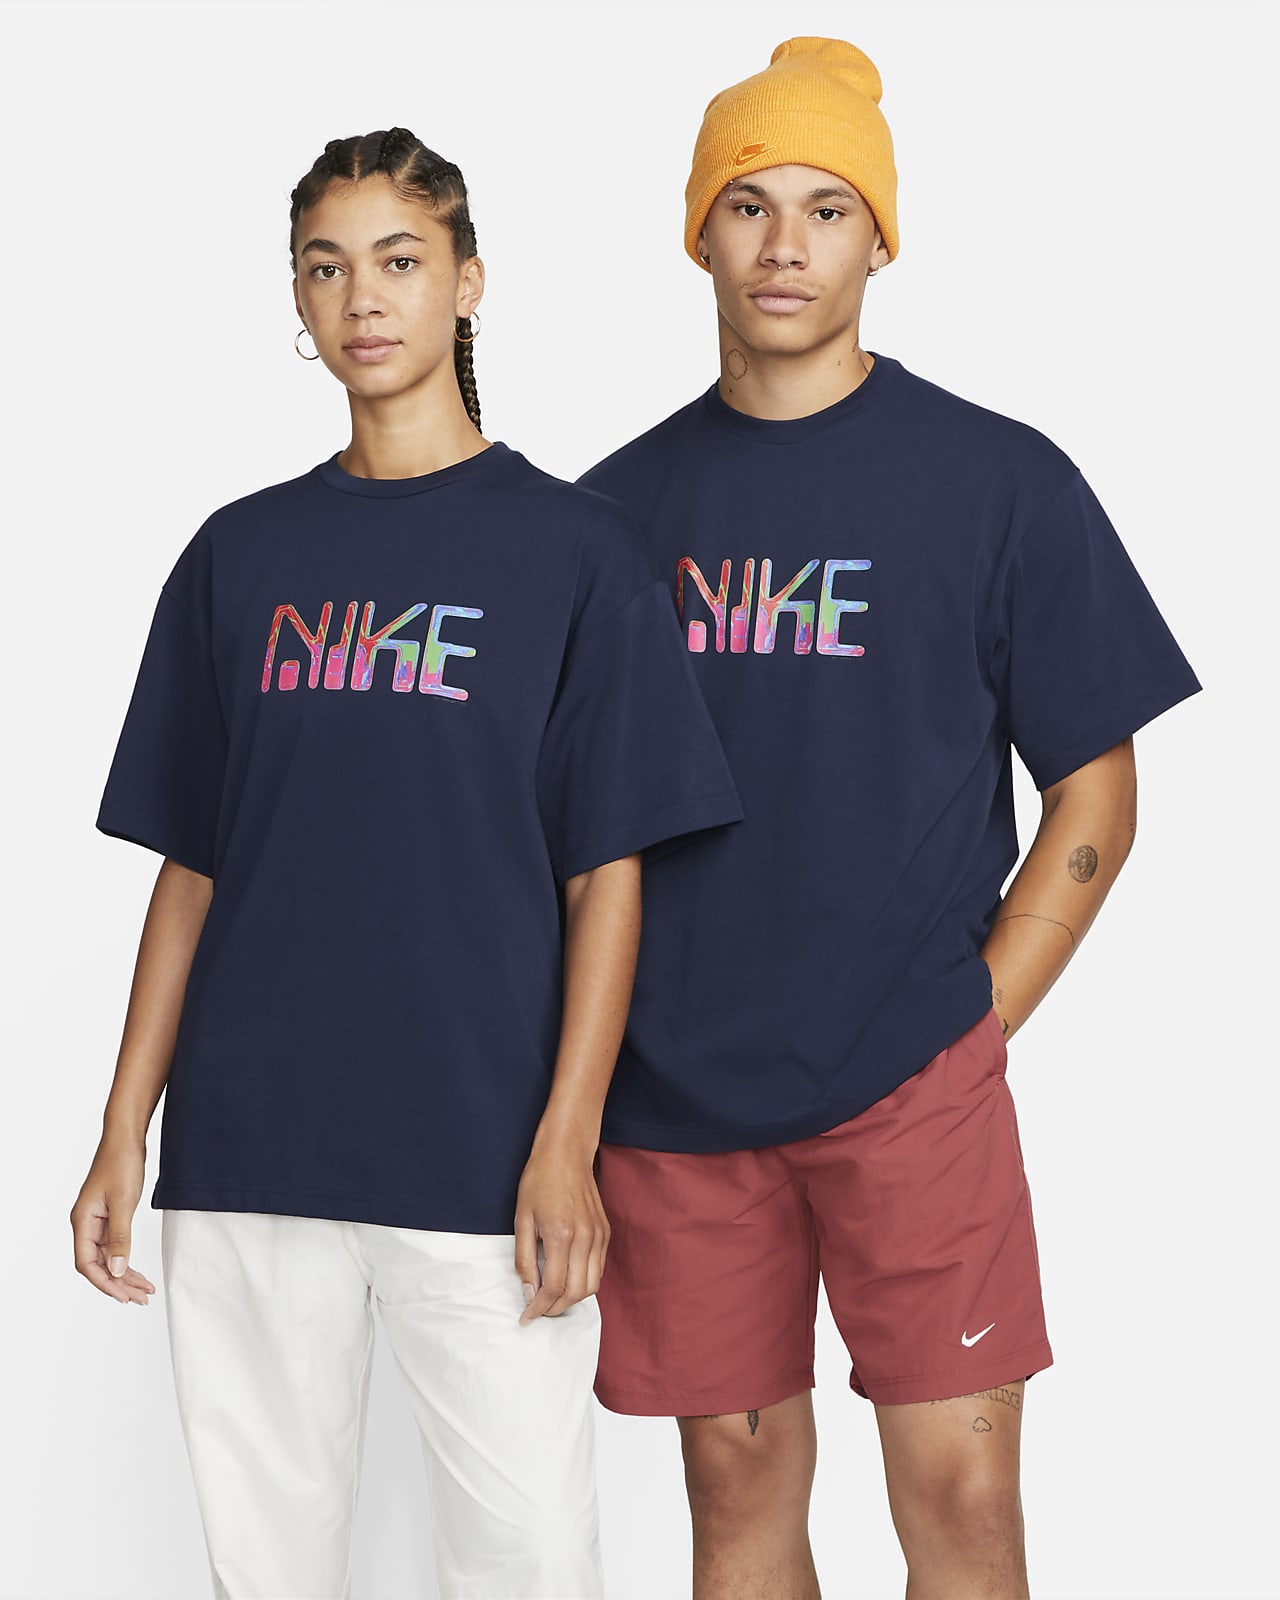 Citar Levántate Discriminación Nike Camiseta. Nike ES